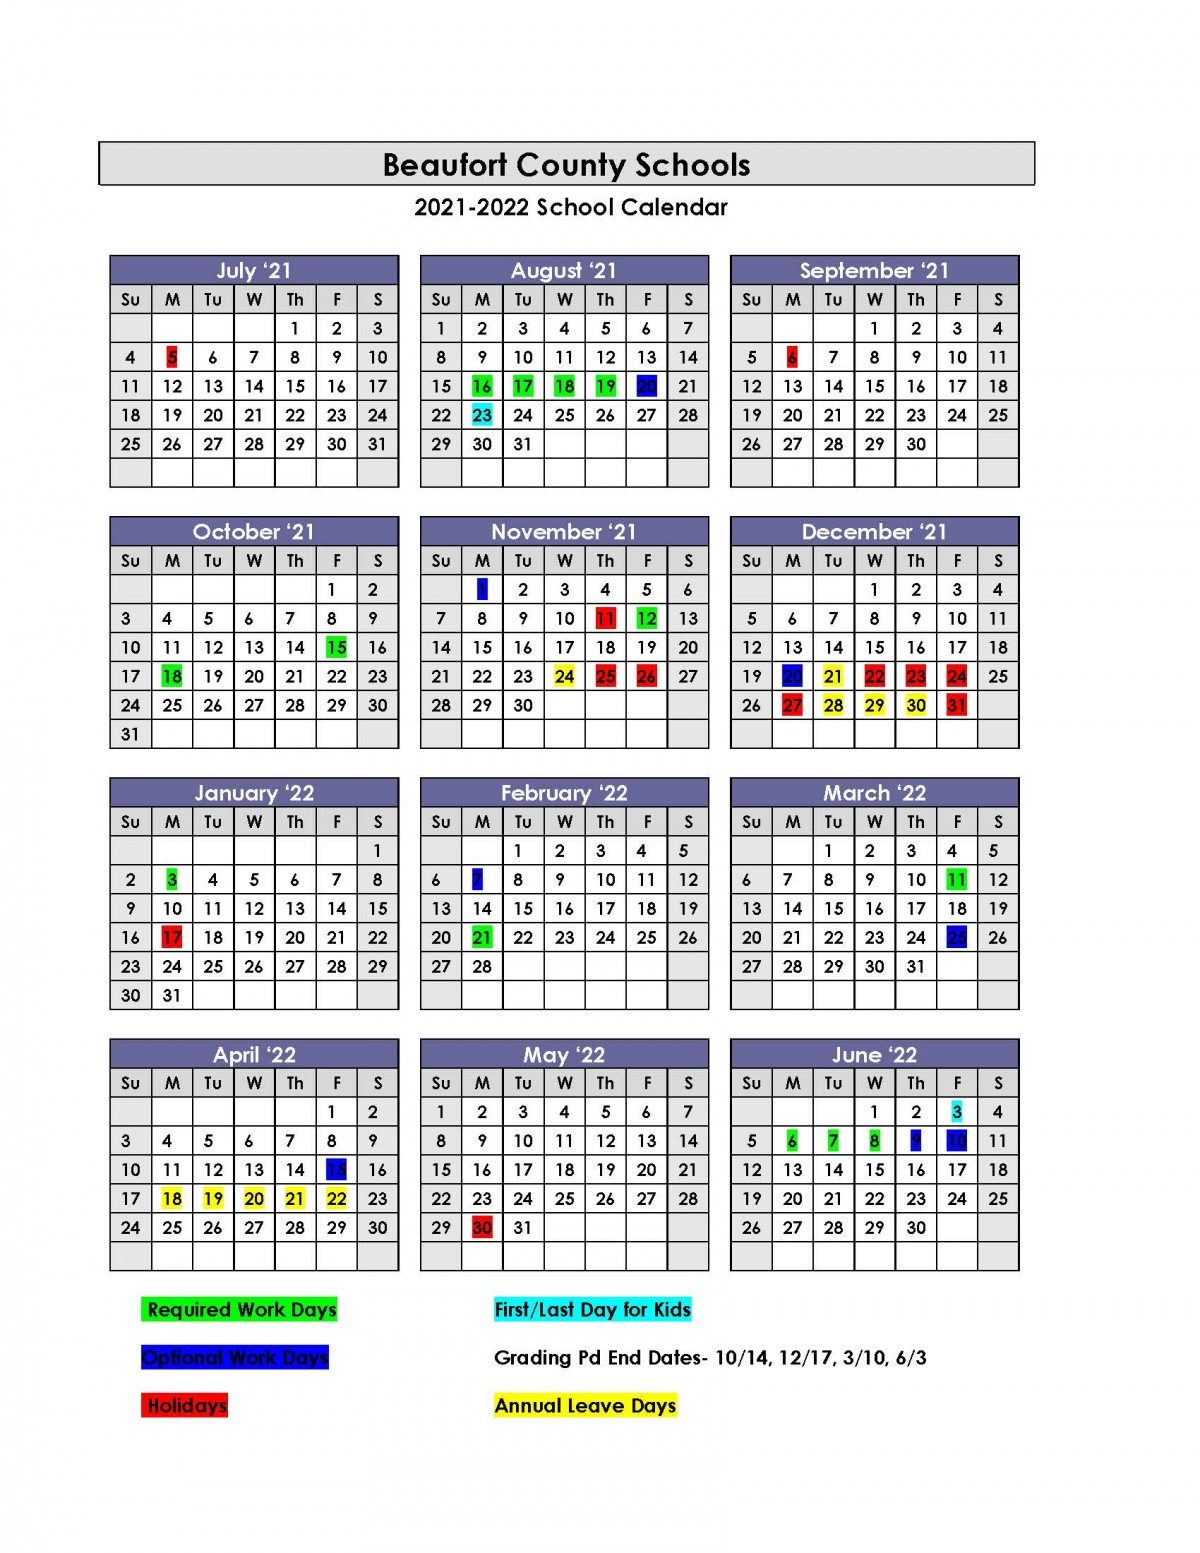 Beaufort County School District Calendar 2022 2022 2022